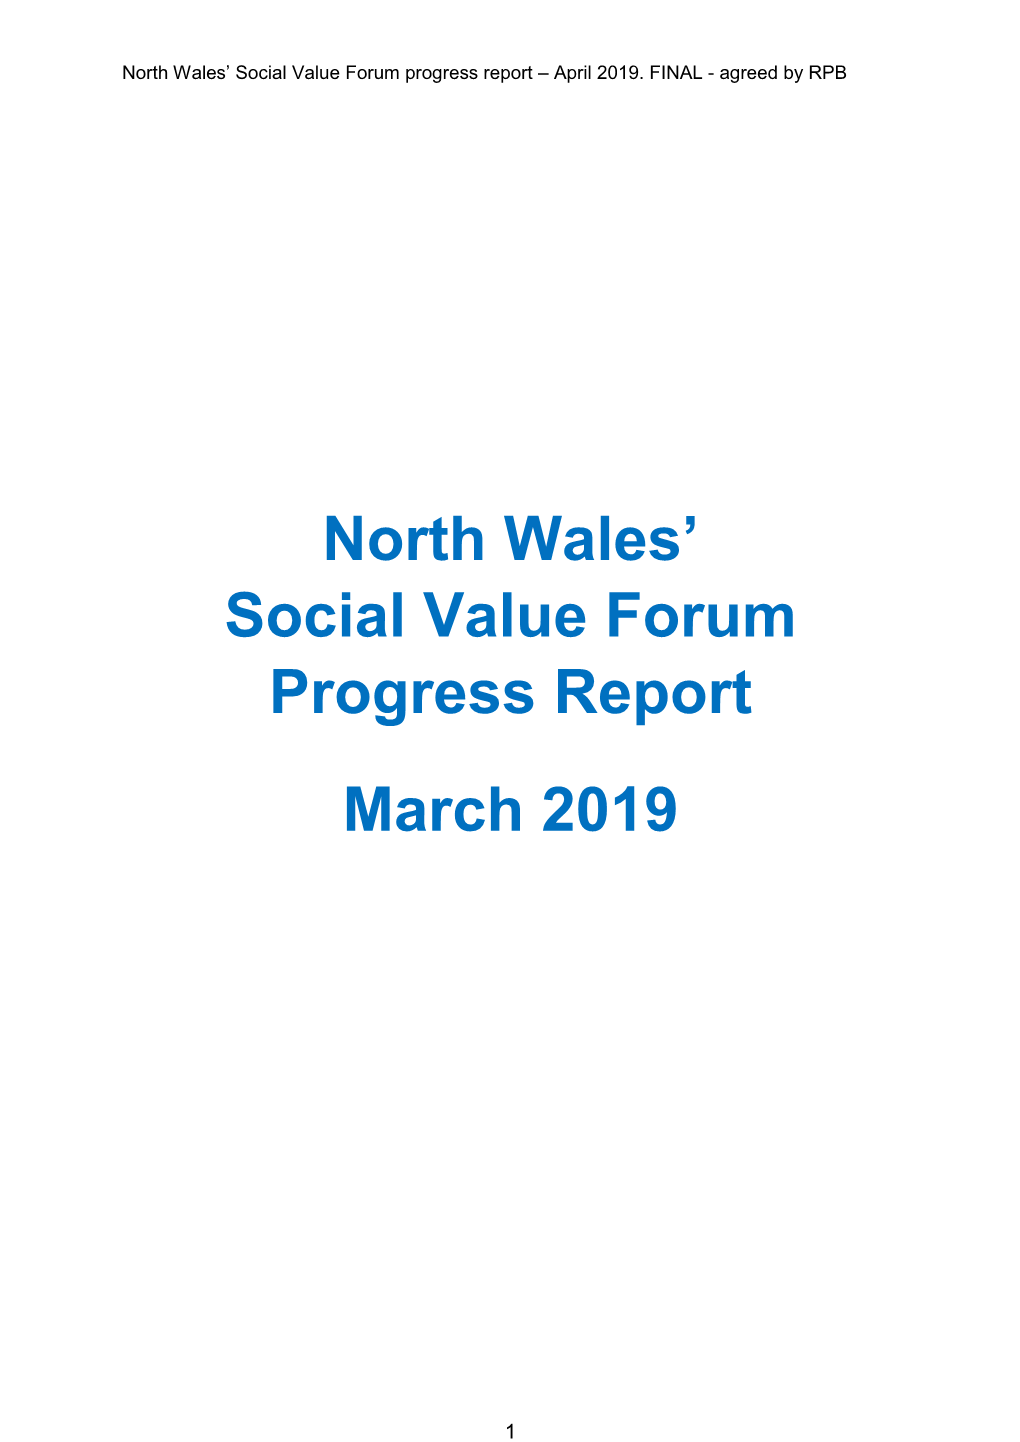 North Wales' Social Value Forum Progress Report March 2019